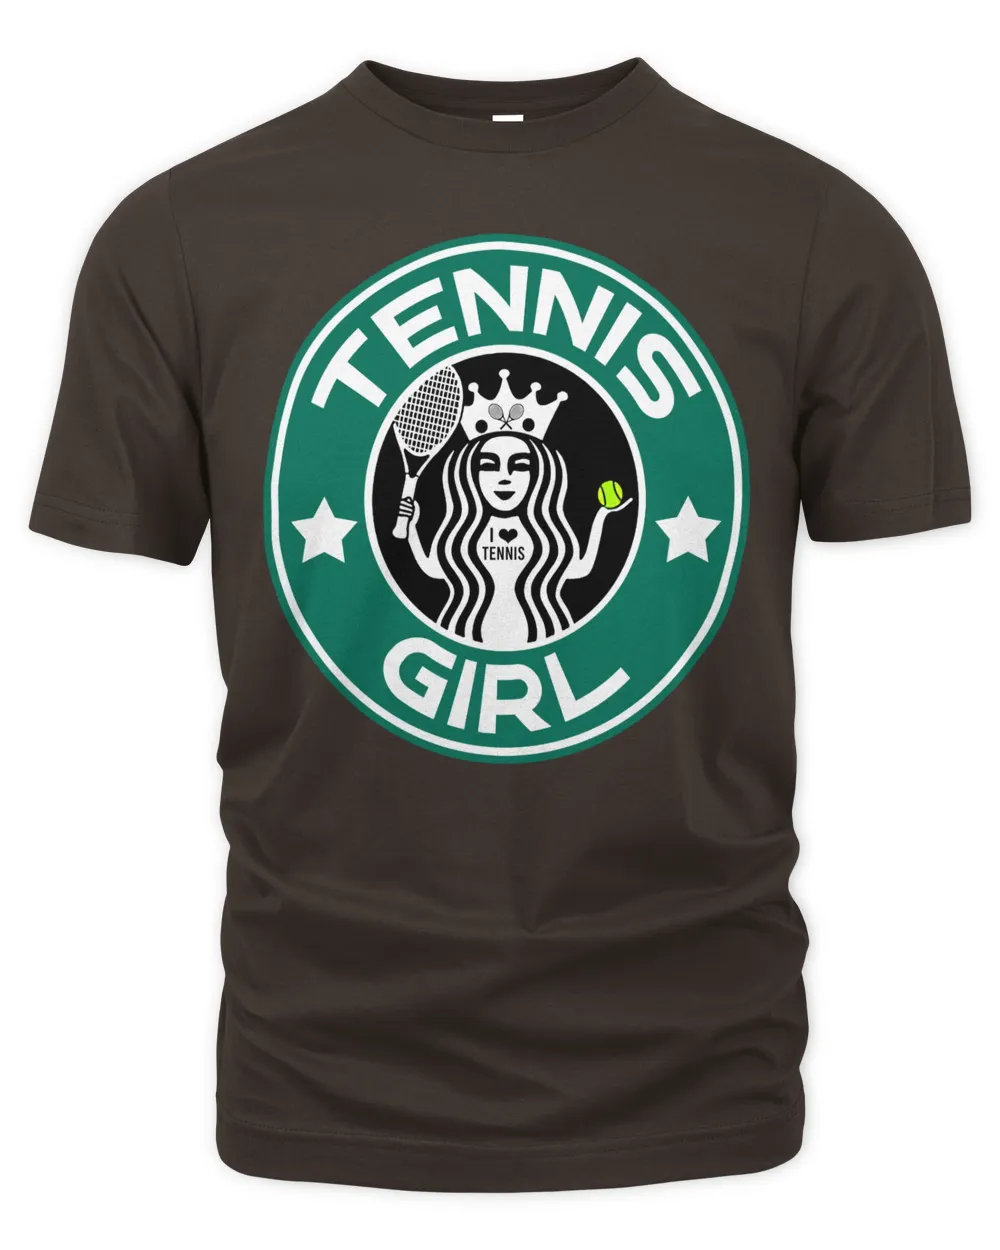 Tennis girl tee